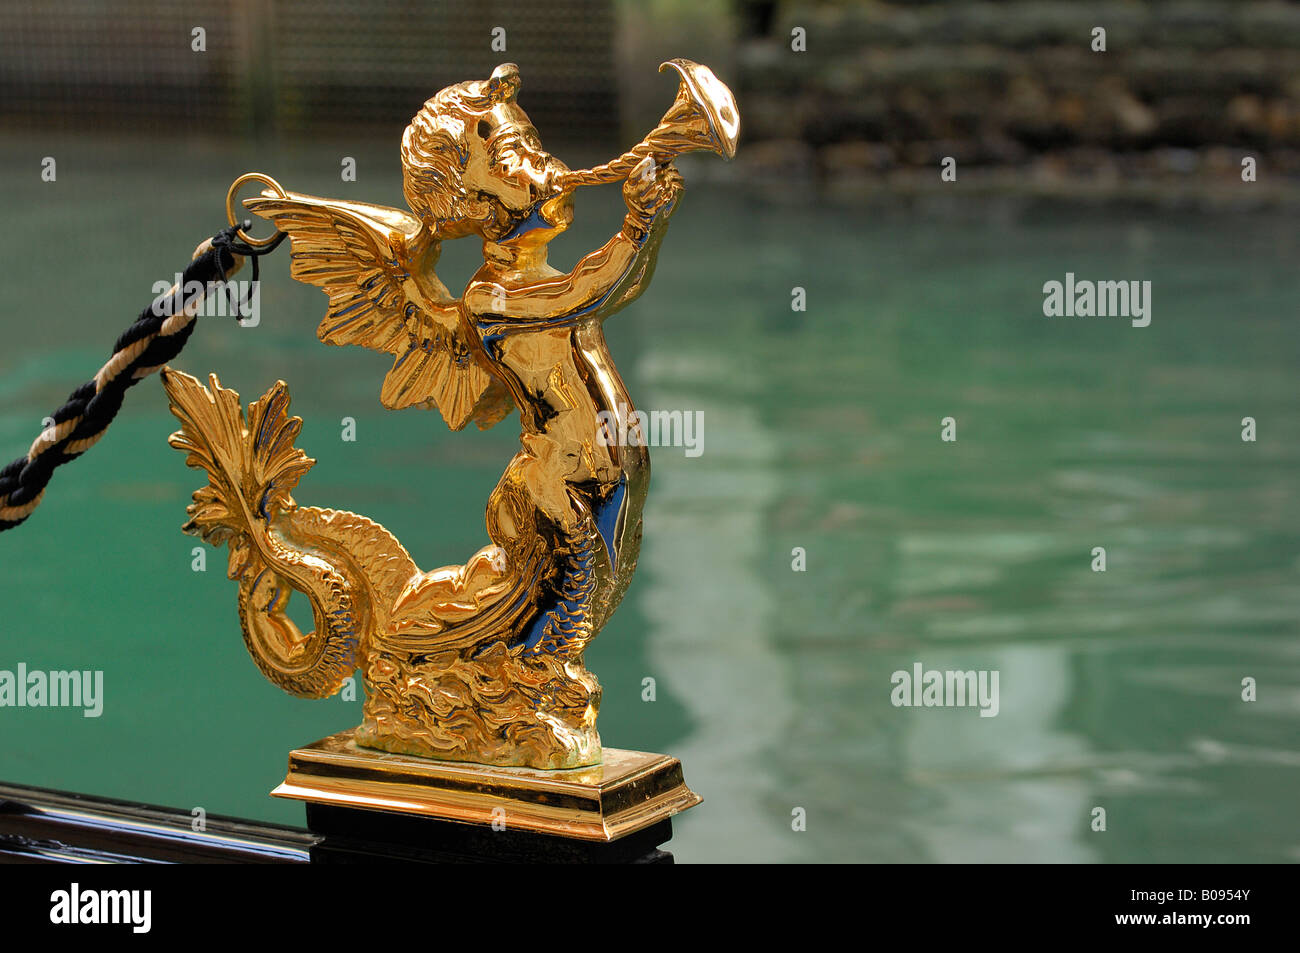 Figure on a gondola, golden angel with trombone, Venice, Venetia, Italy Stock Photo